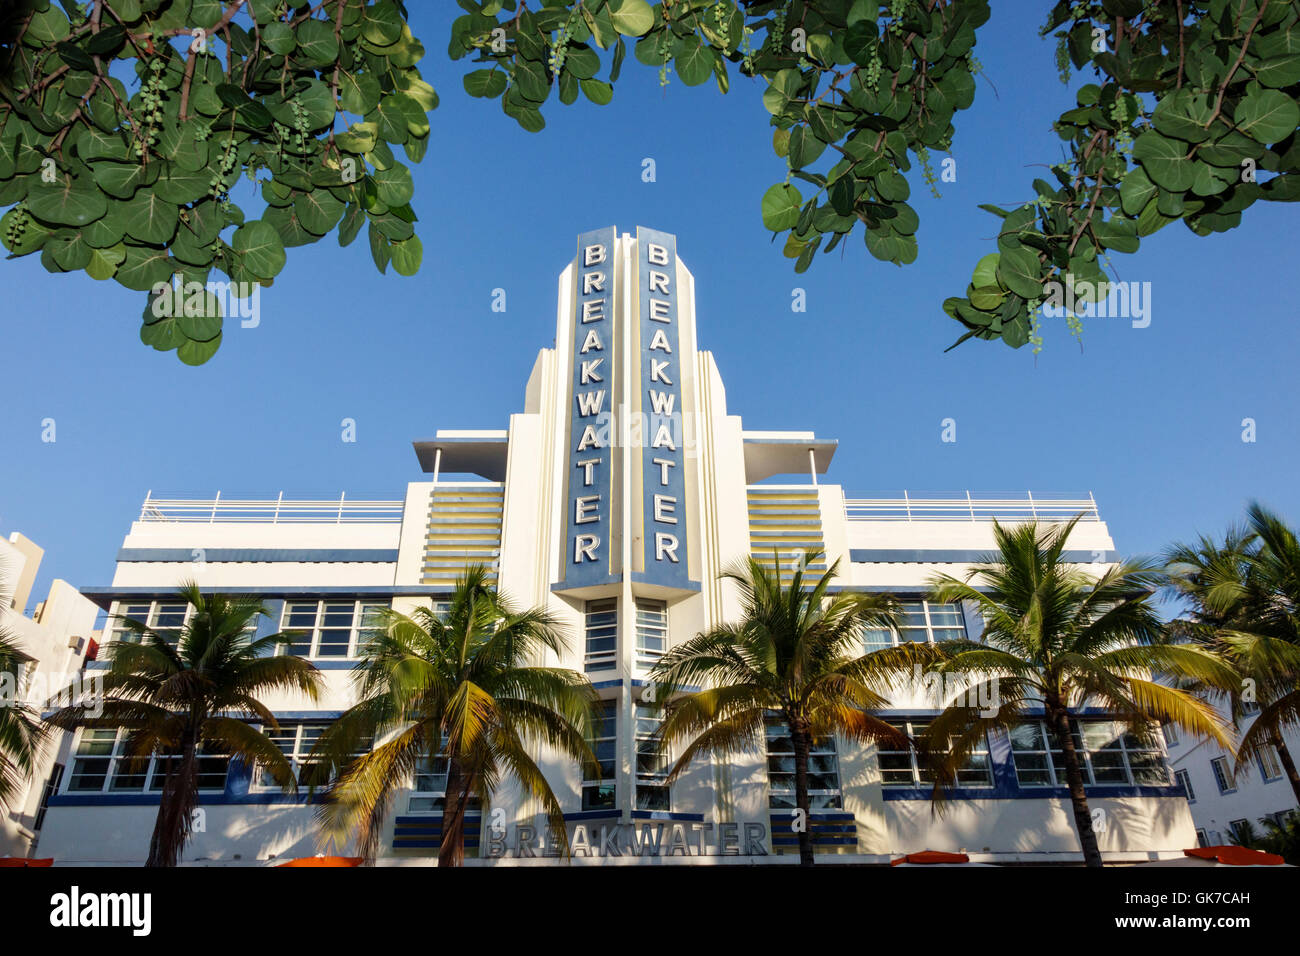 Miami Beach Florida,South Beach,Ocean Drive,Tropical Deco,Breakwater Hotel,1936,facade,architecture,Anton Skislewicz,signage,sign,seagrape,palm,tree,F Stock Photo